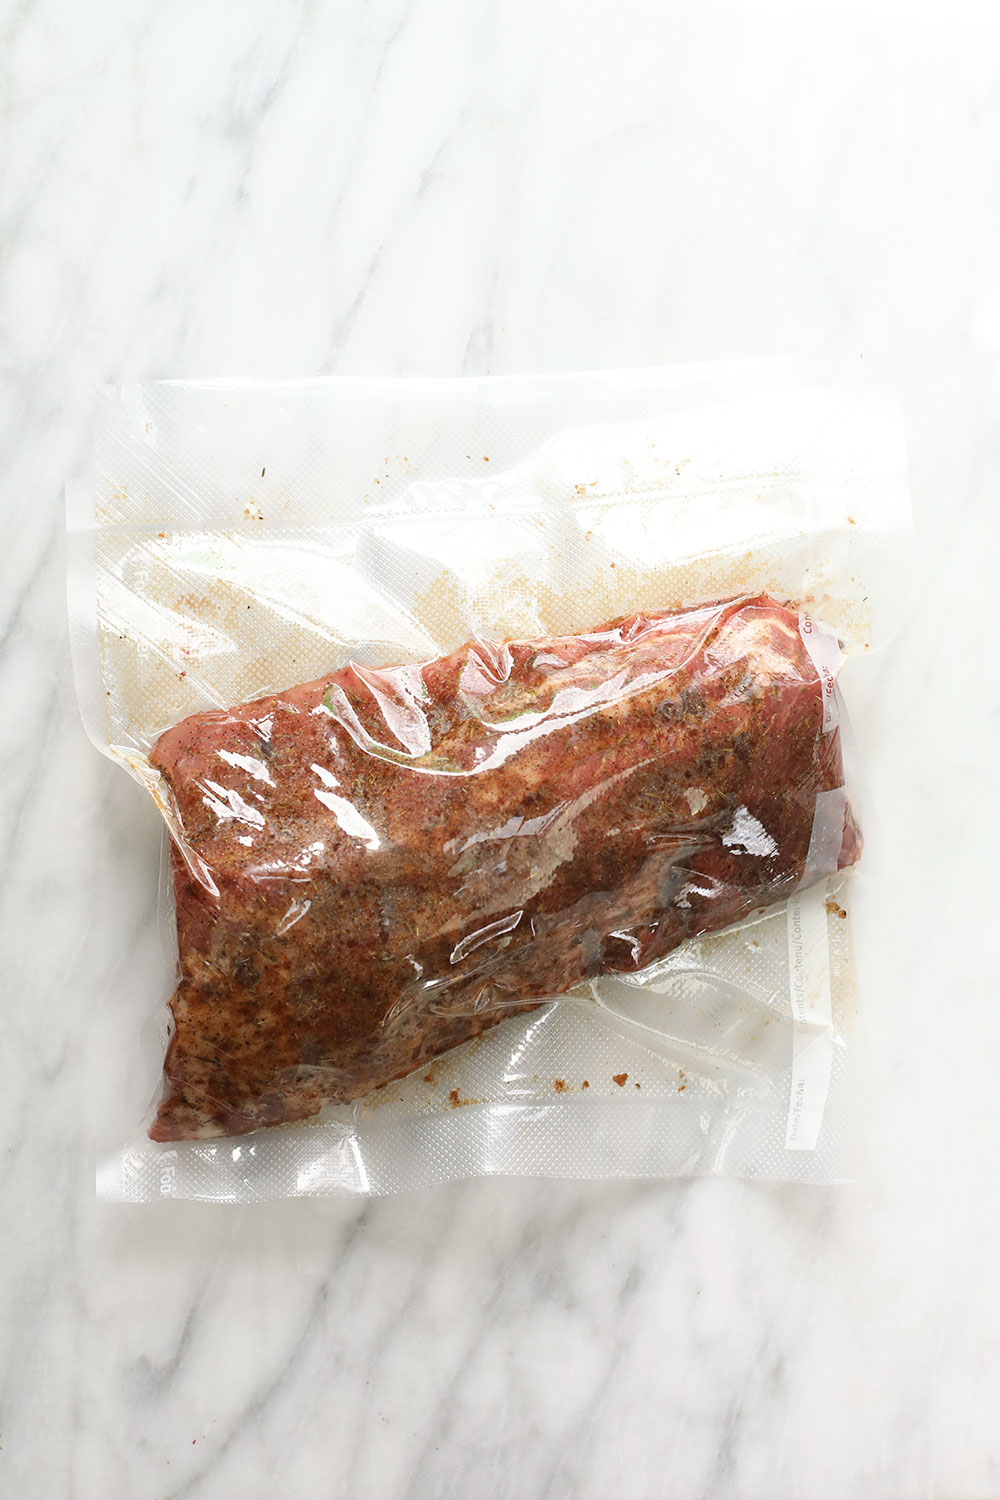 Sous vide ribs in a food savor bag